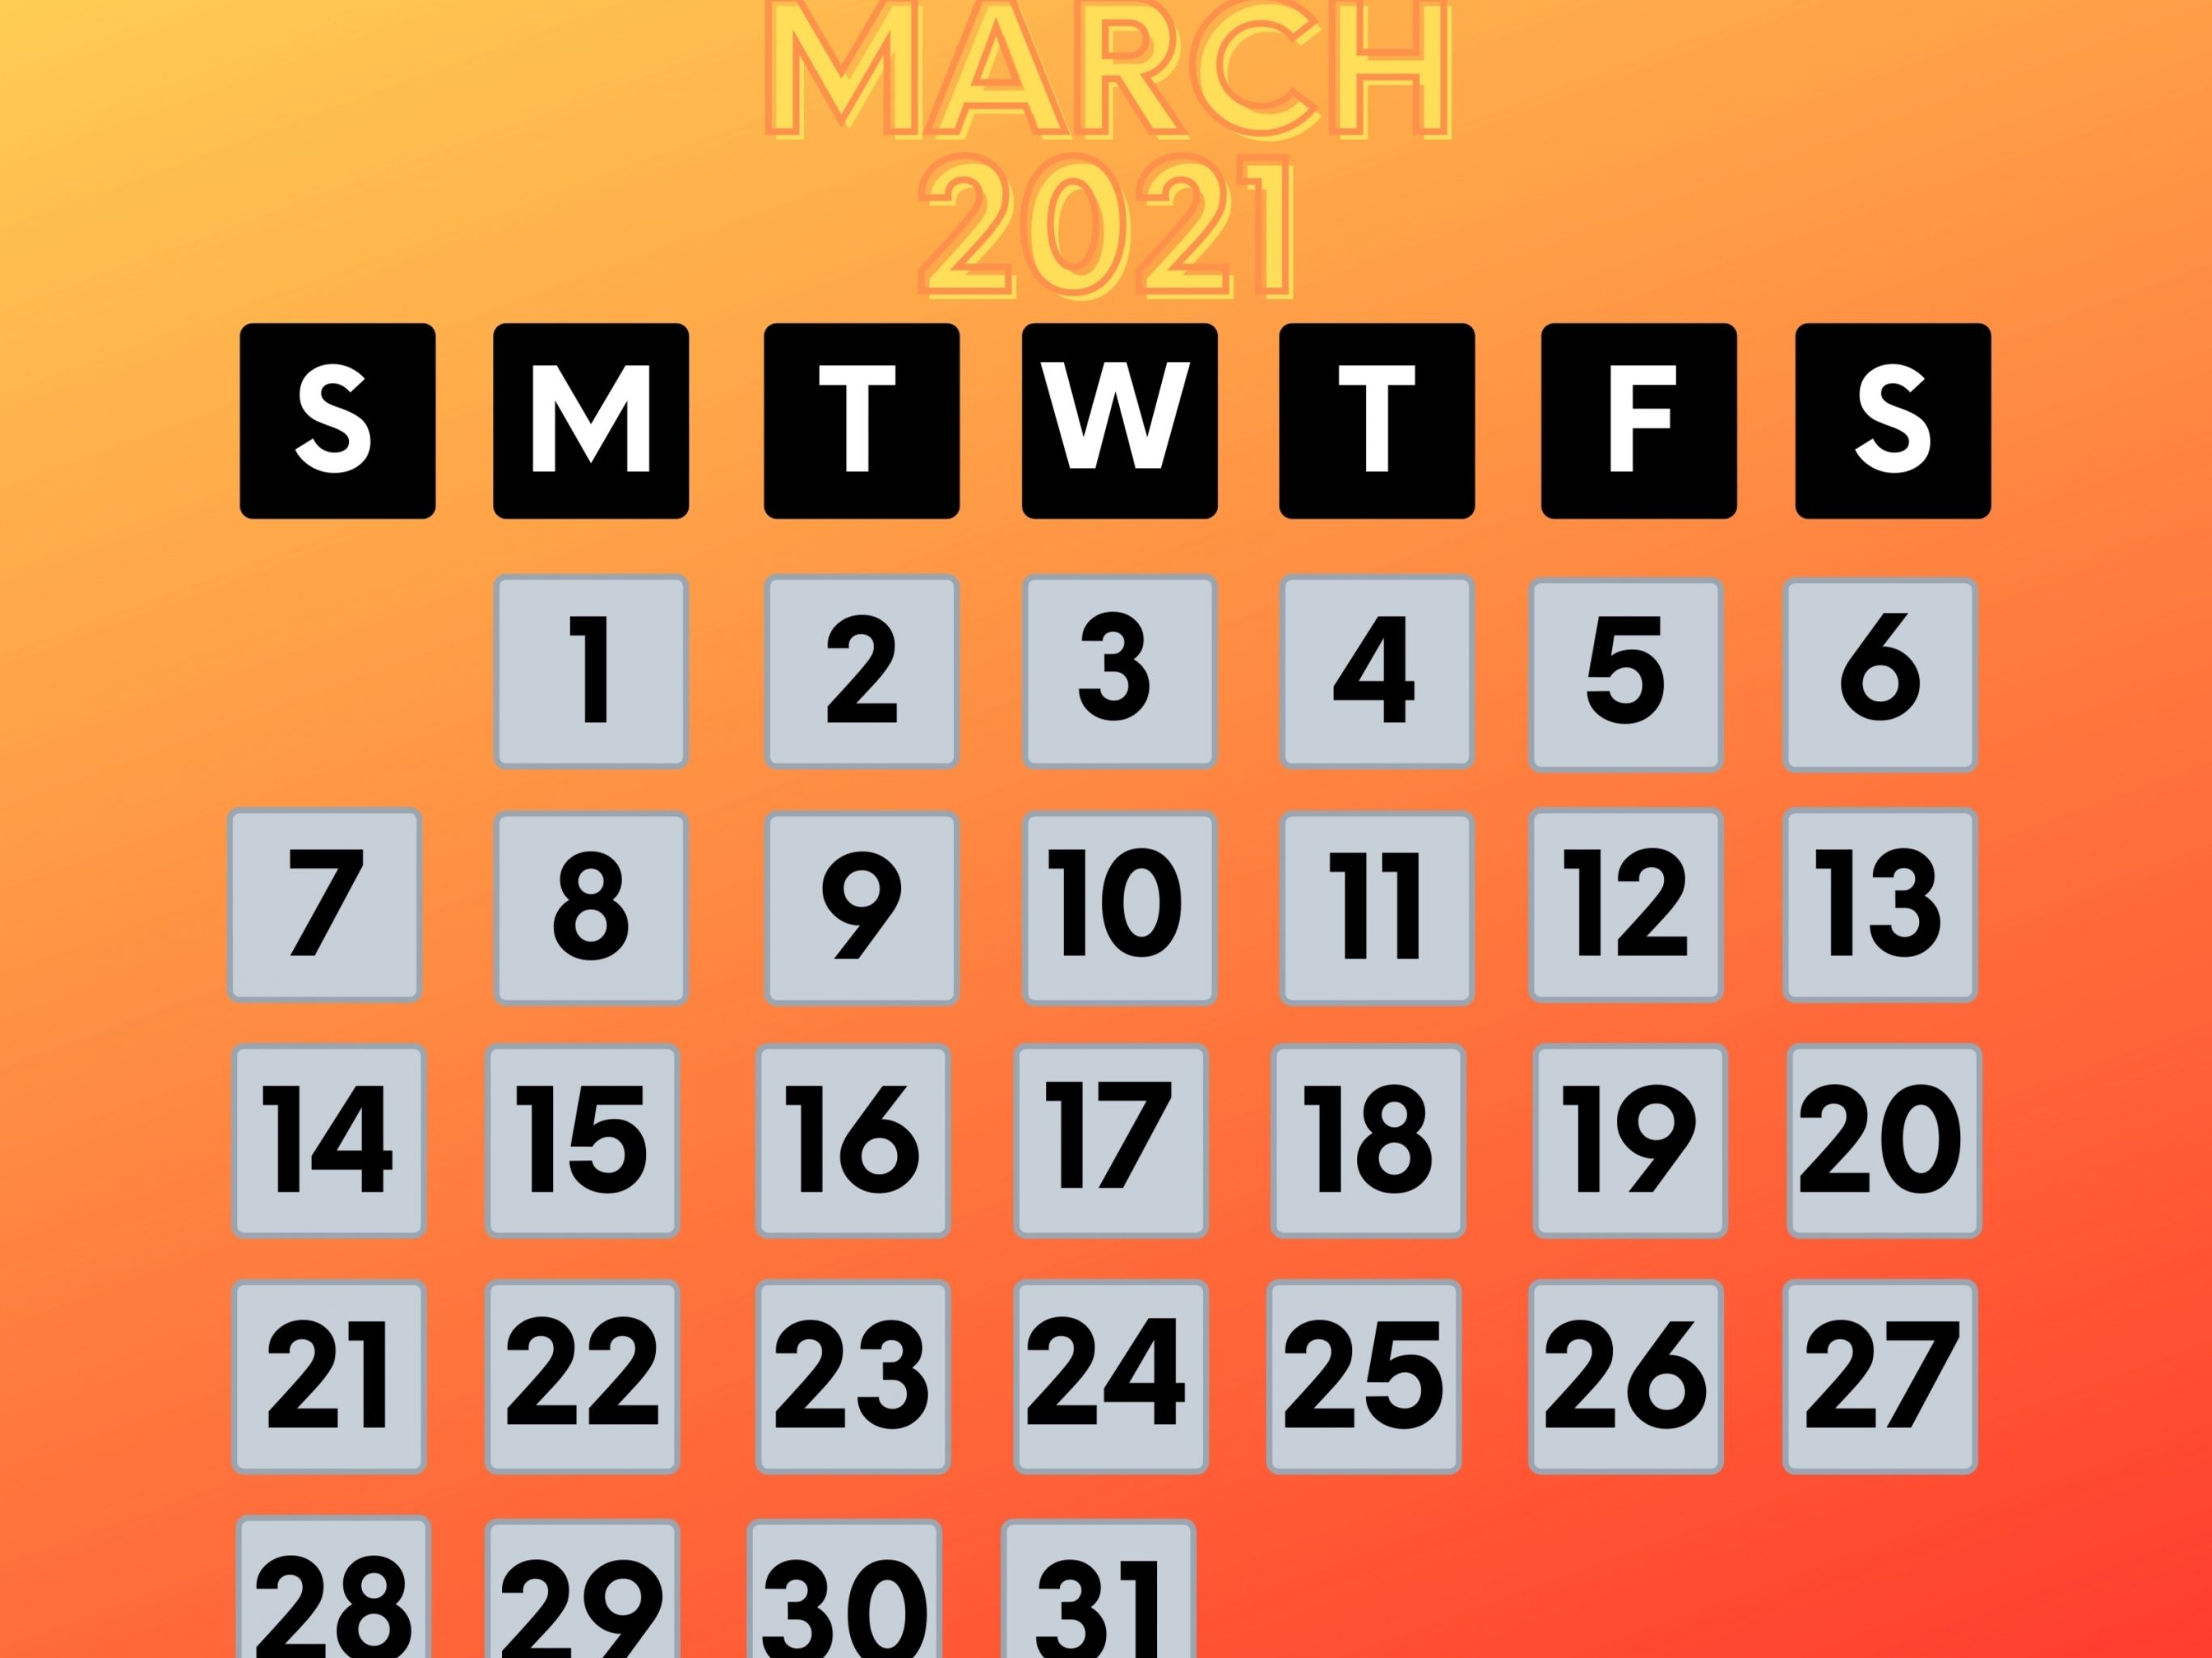 2732x2048 iPad air iPad Pro wallpapers March 2021 Calendar iPad Wallpaper 2732x2048 pixels resolution